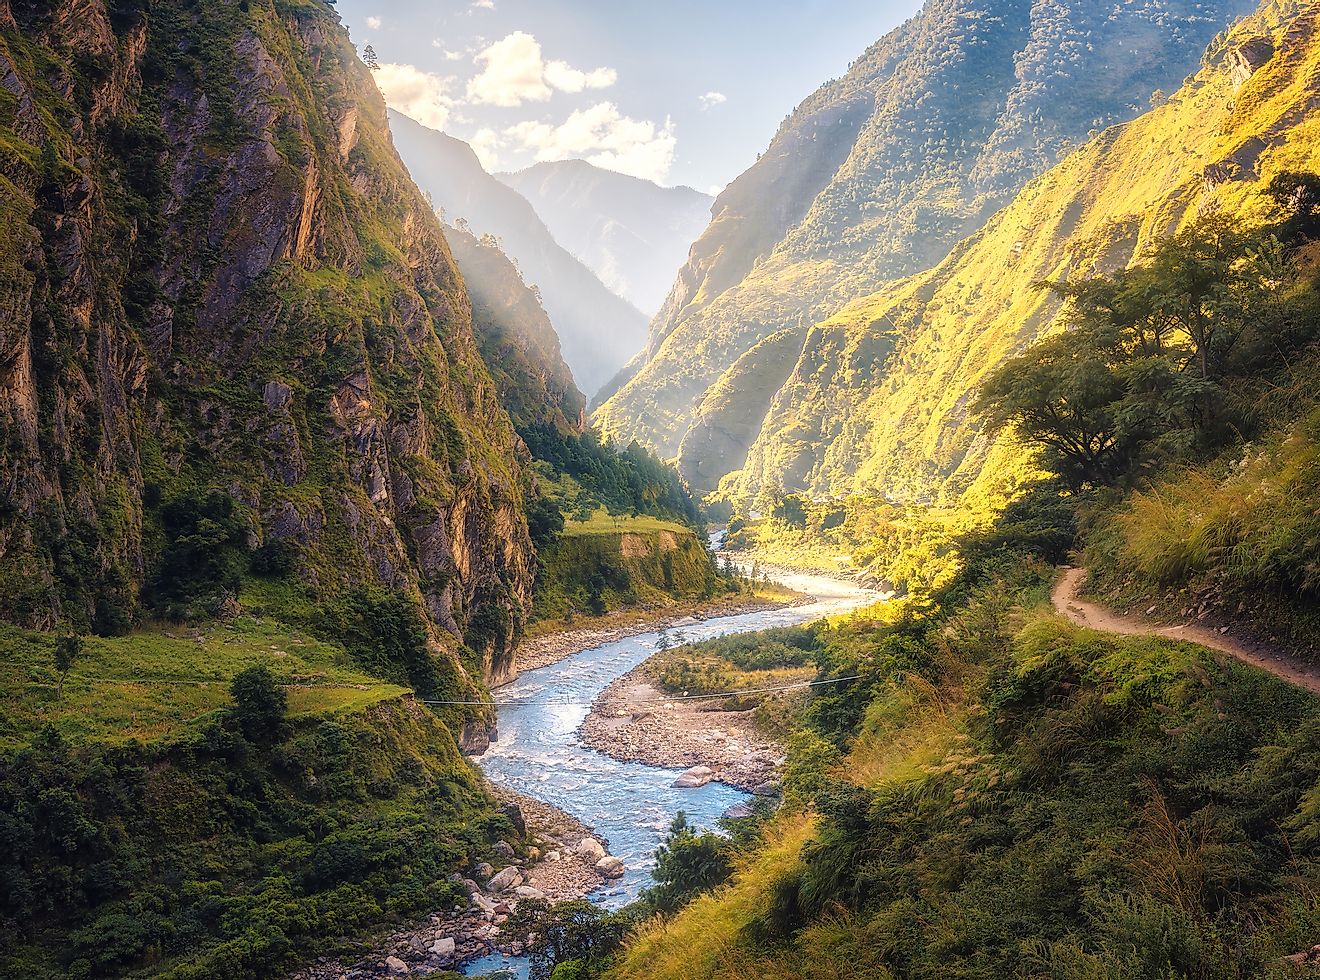 Eastern Himalayan landscape in Nepal.